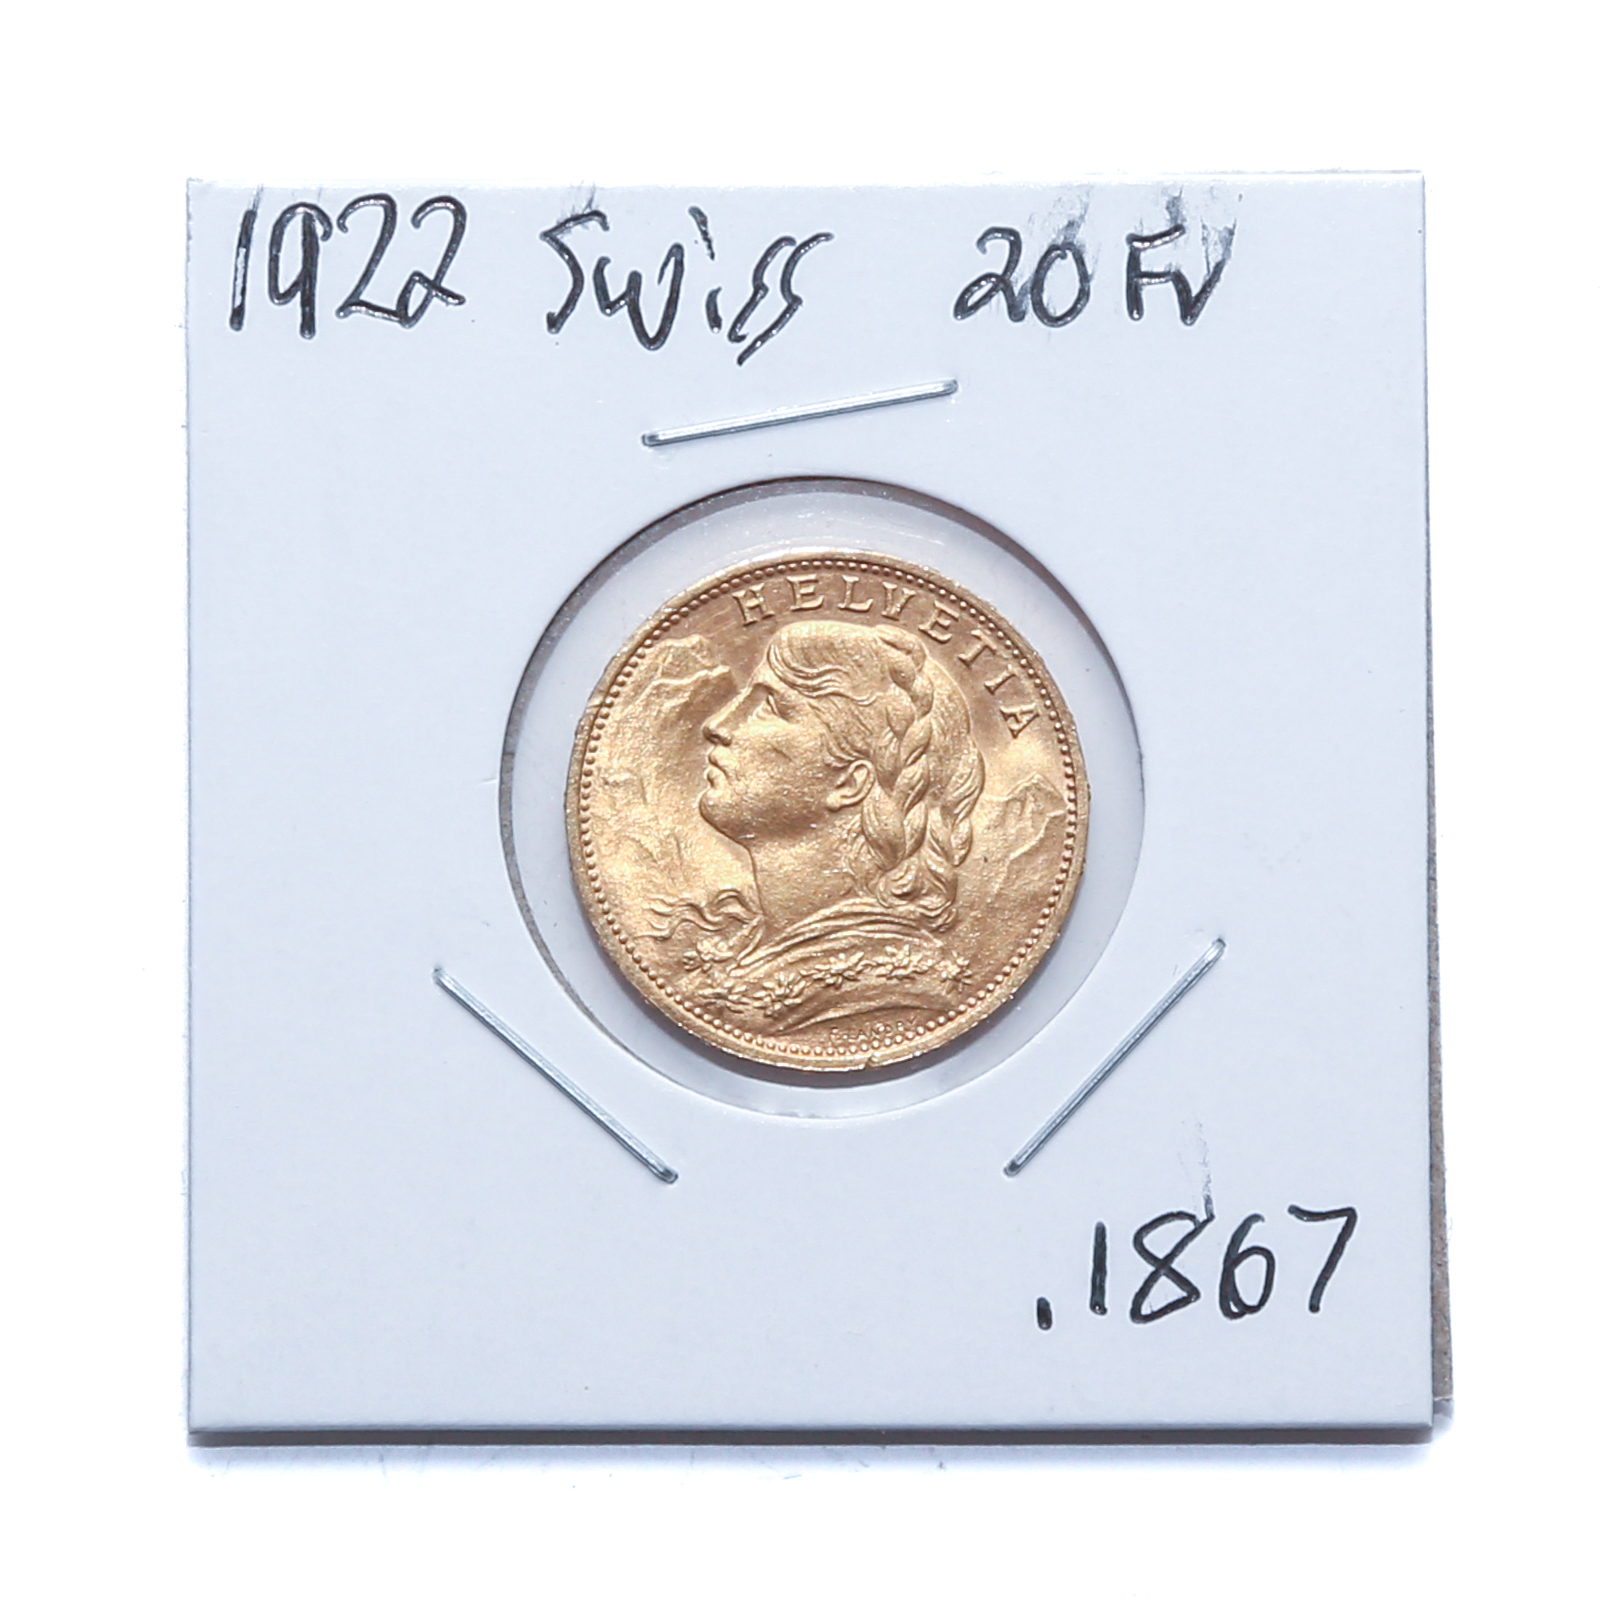 1922 SWISS GOLD 20 FRANCS AGW 1867 354b37